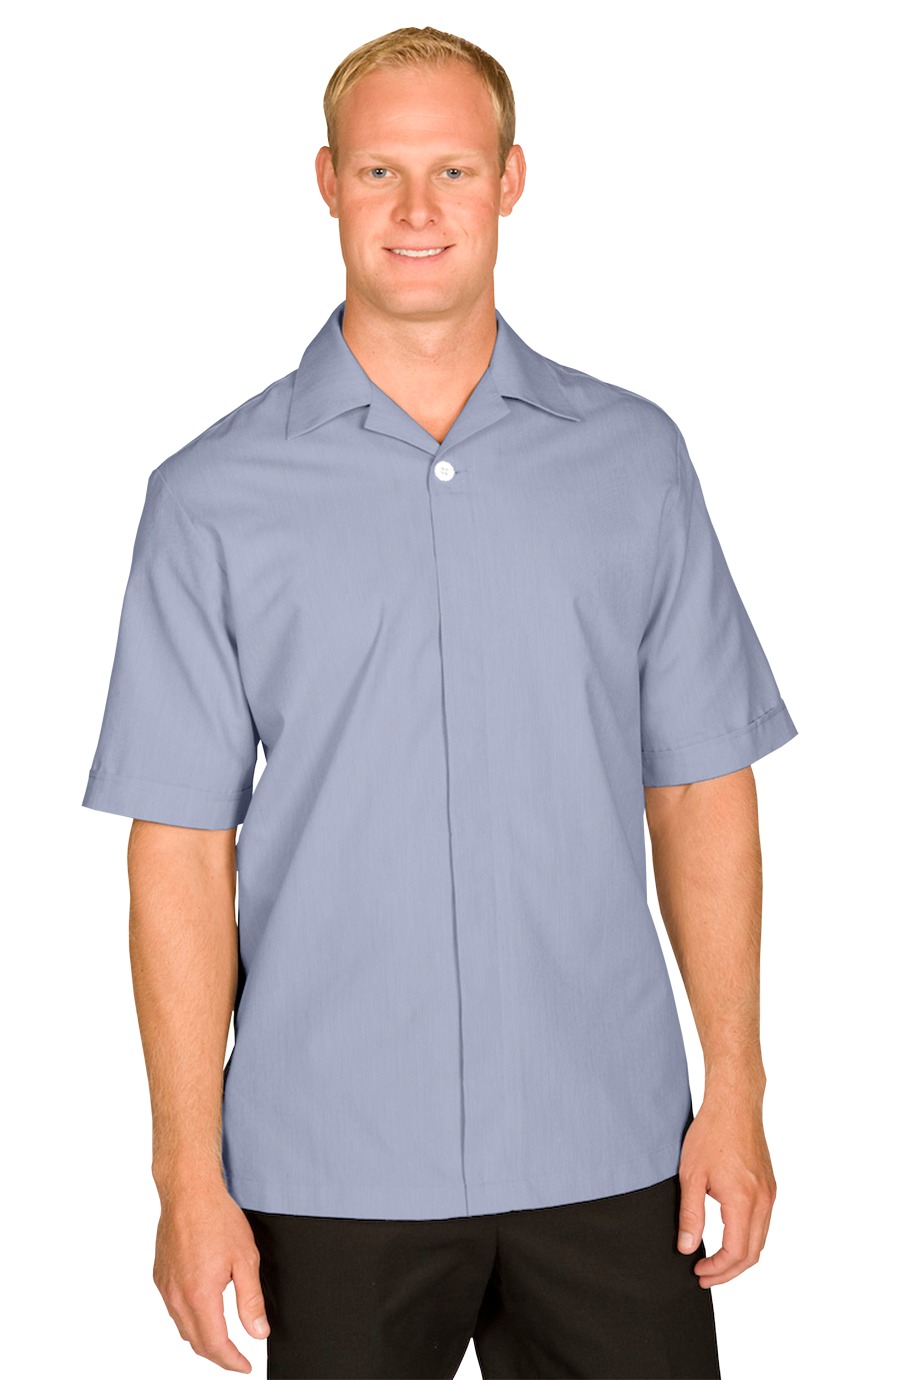 Edwards Garment 4287 - Men's Pincord Tunic